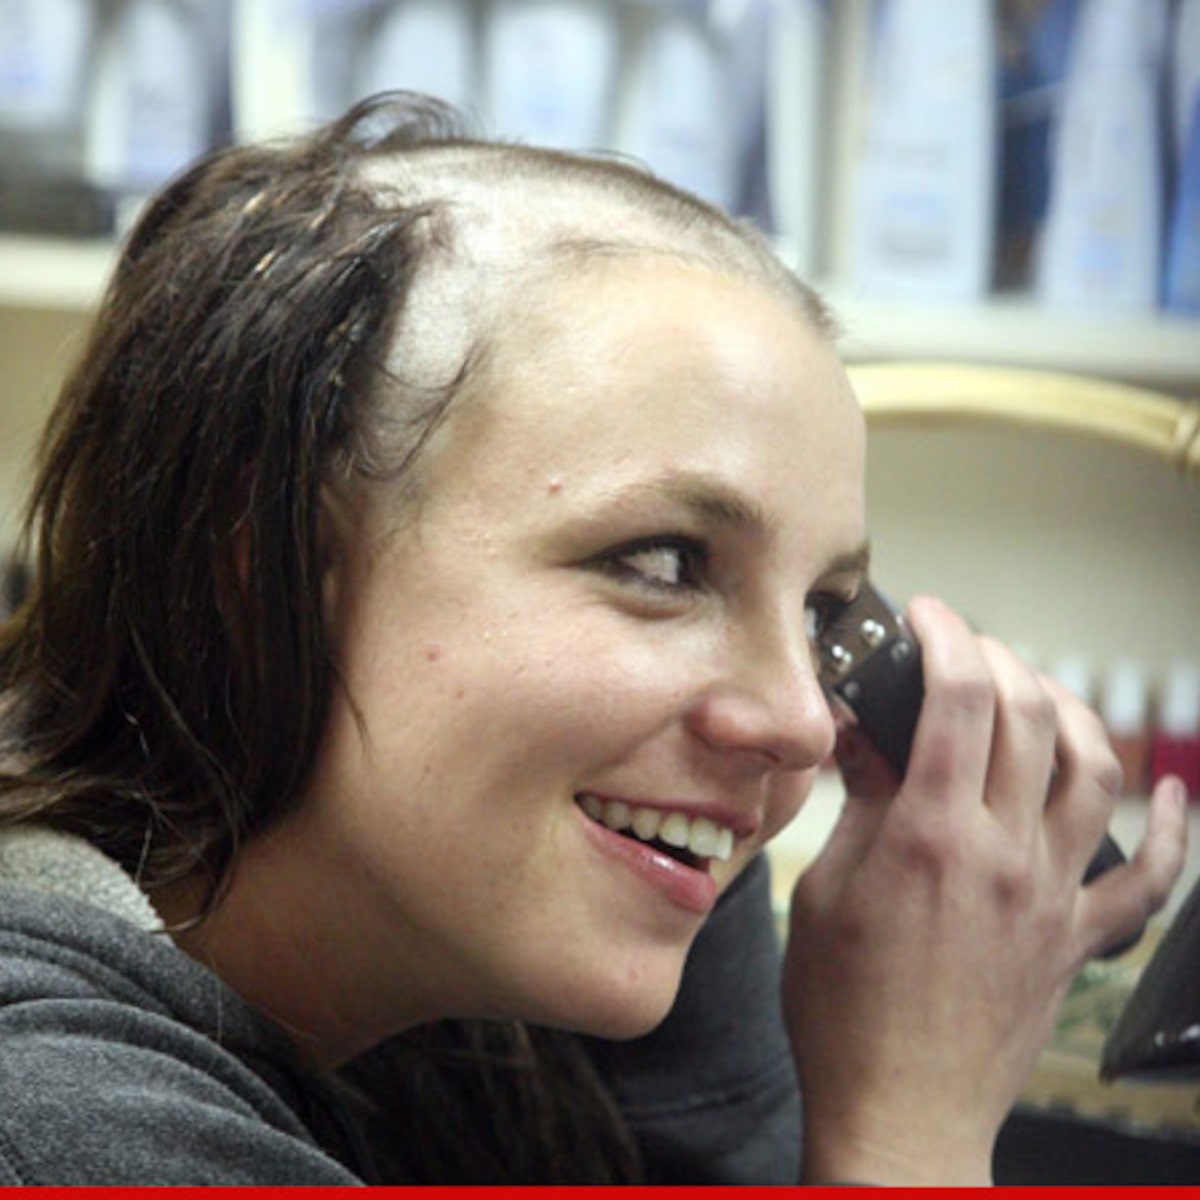 Britney shaving her head.